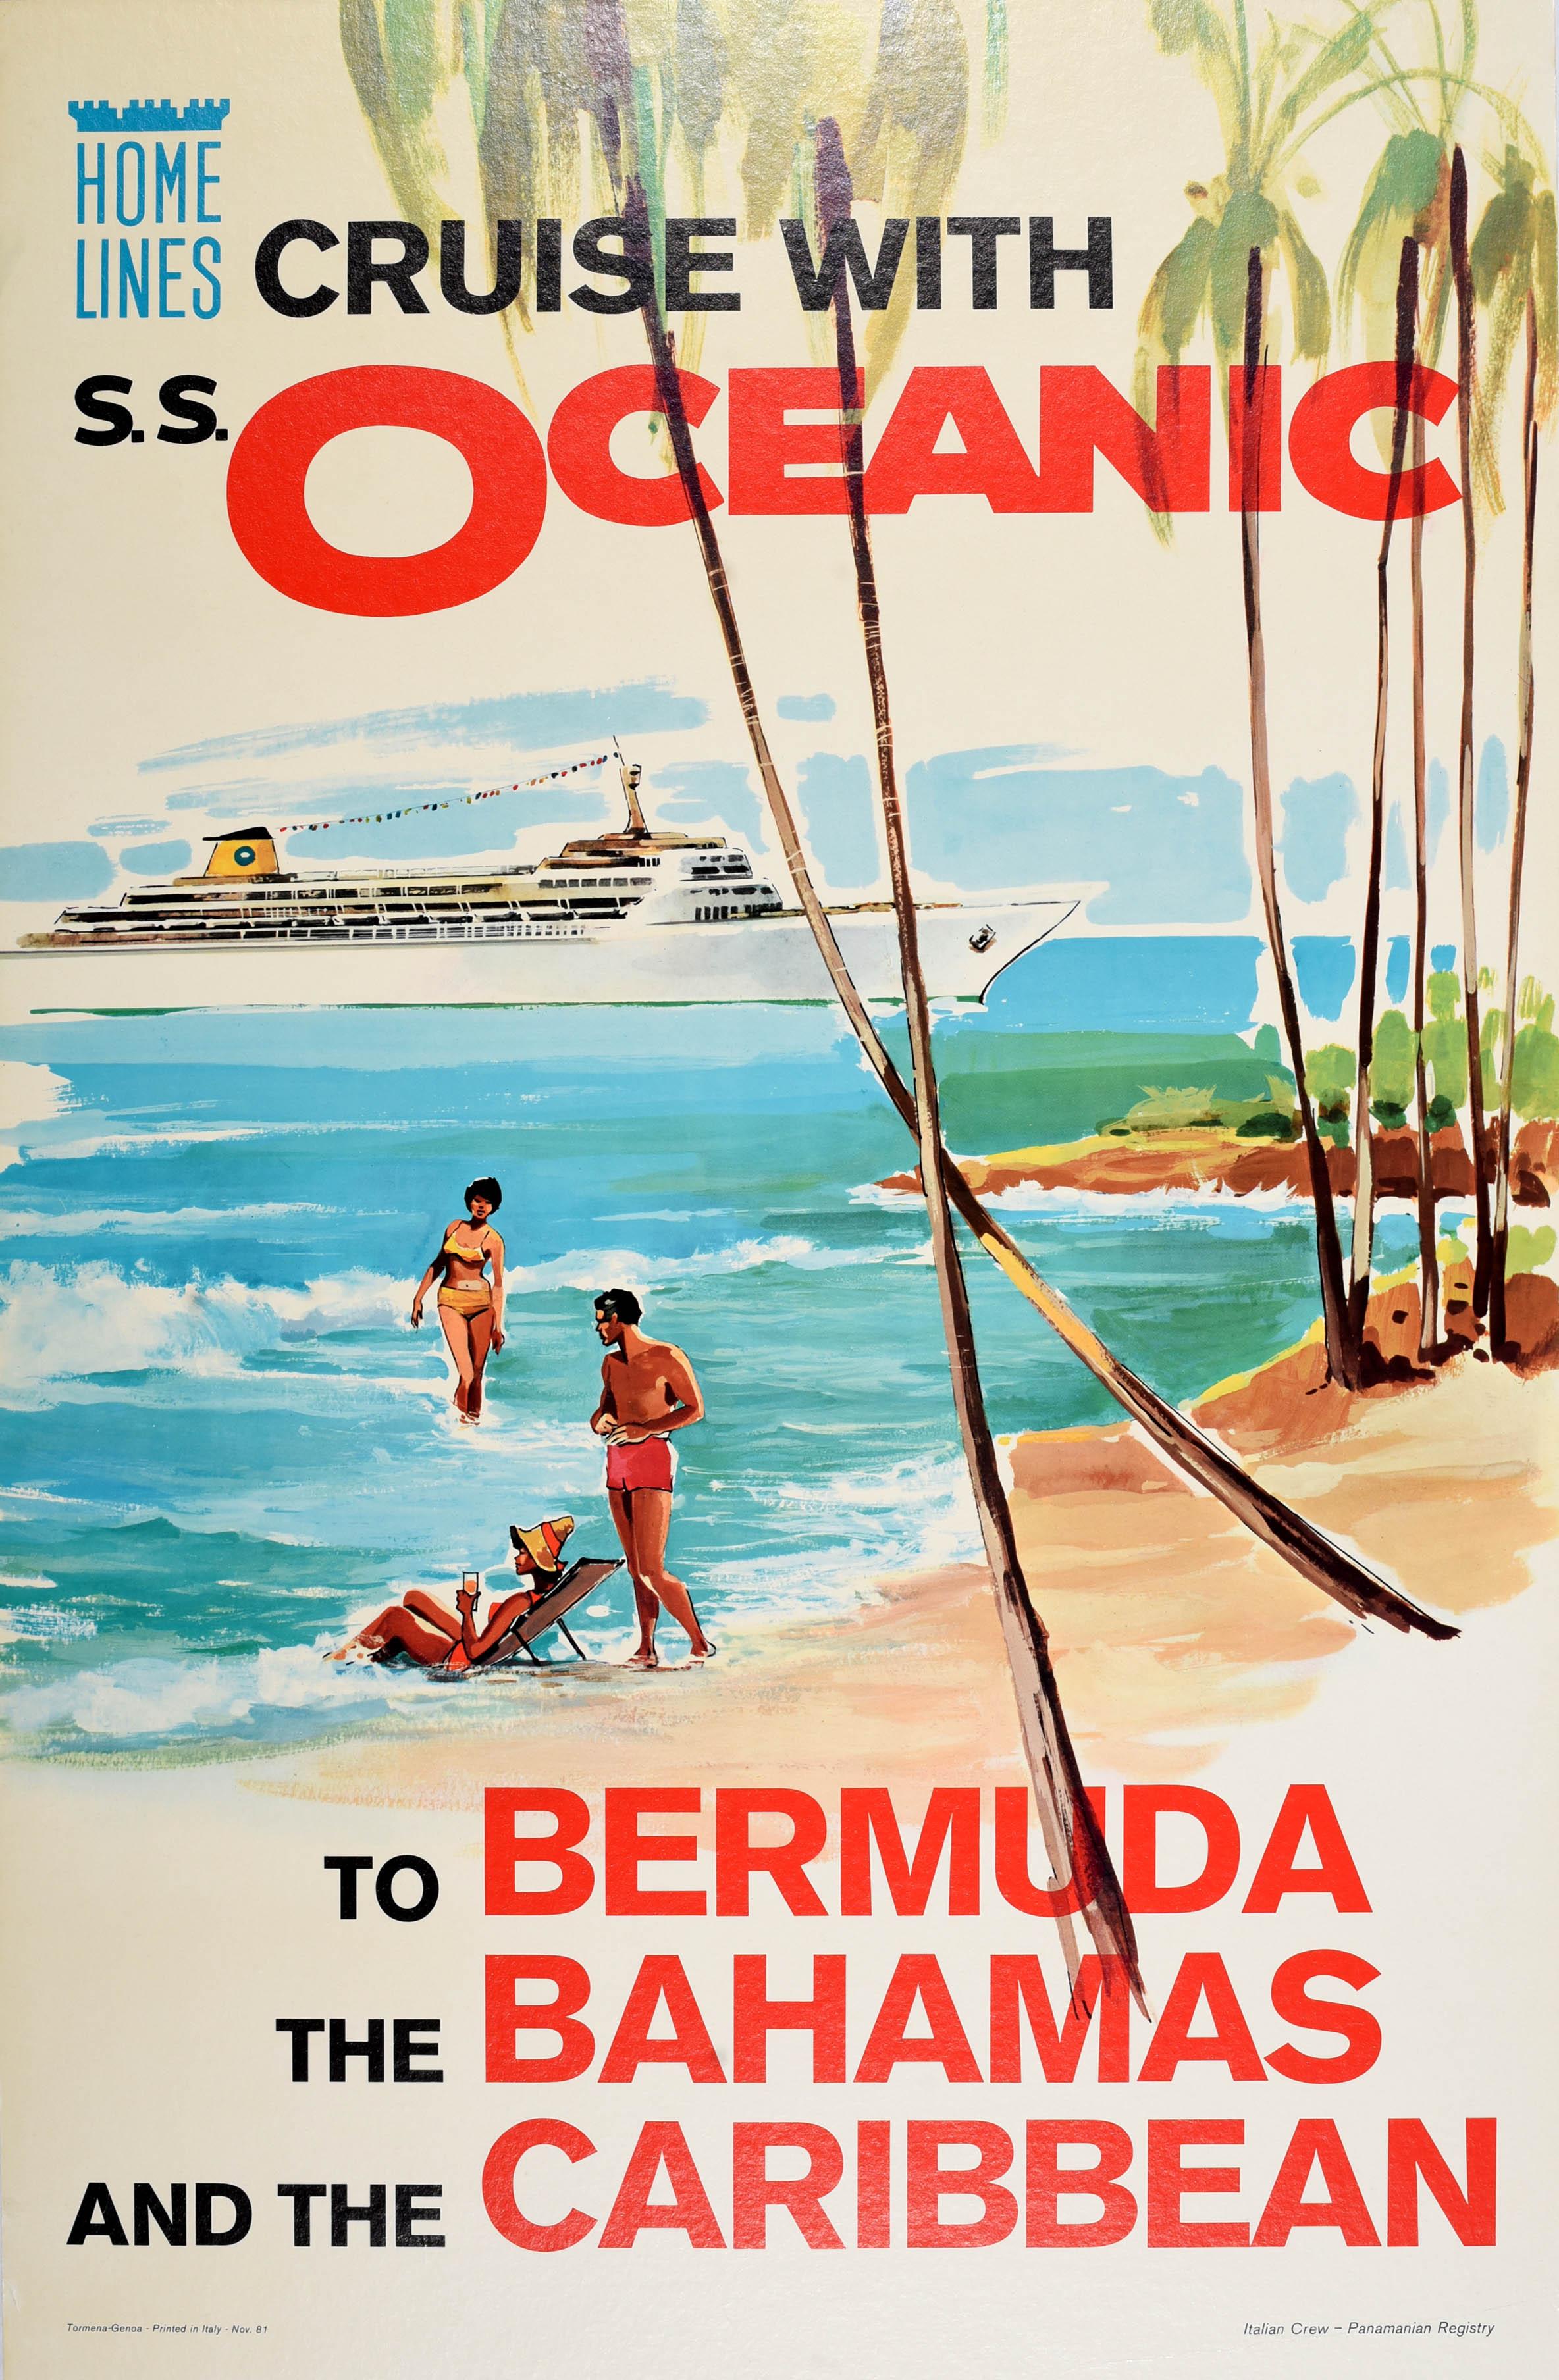 Unknown Print - Original Vintage Travel Poster Oceanic Cruise Bermuda Bahamas Caribbean Beach